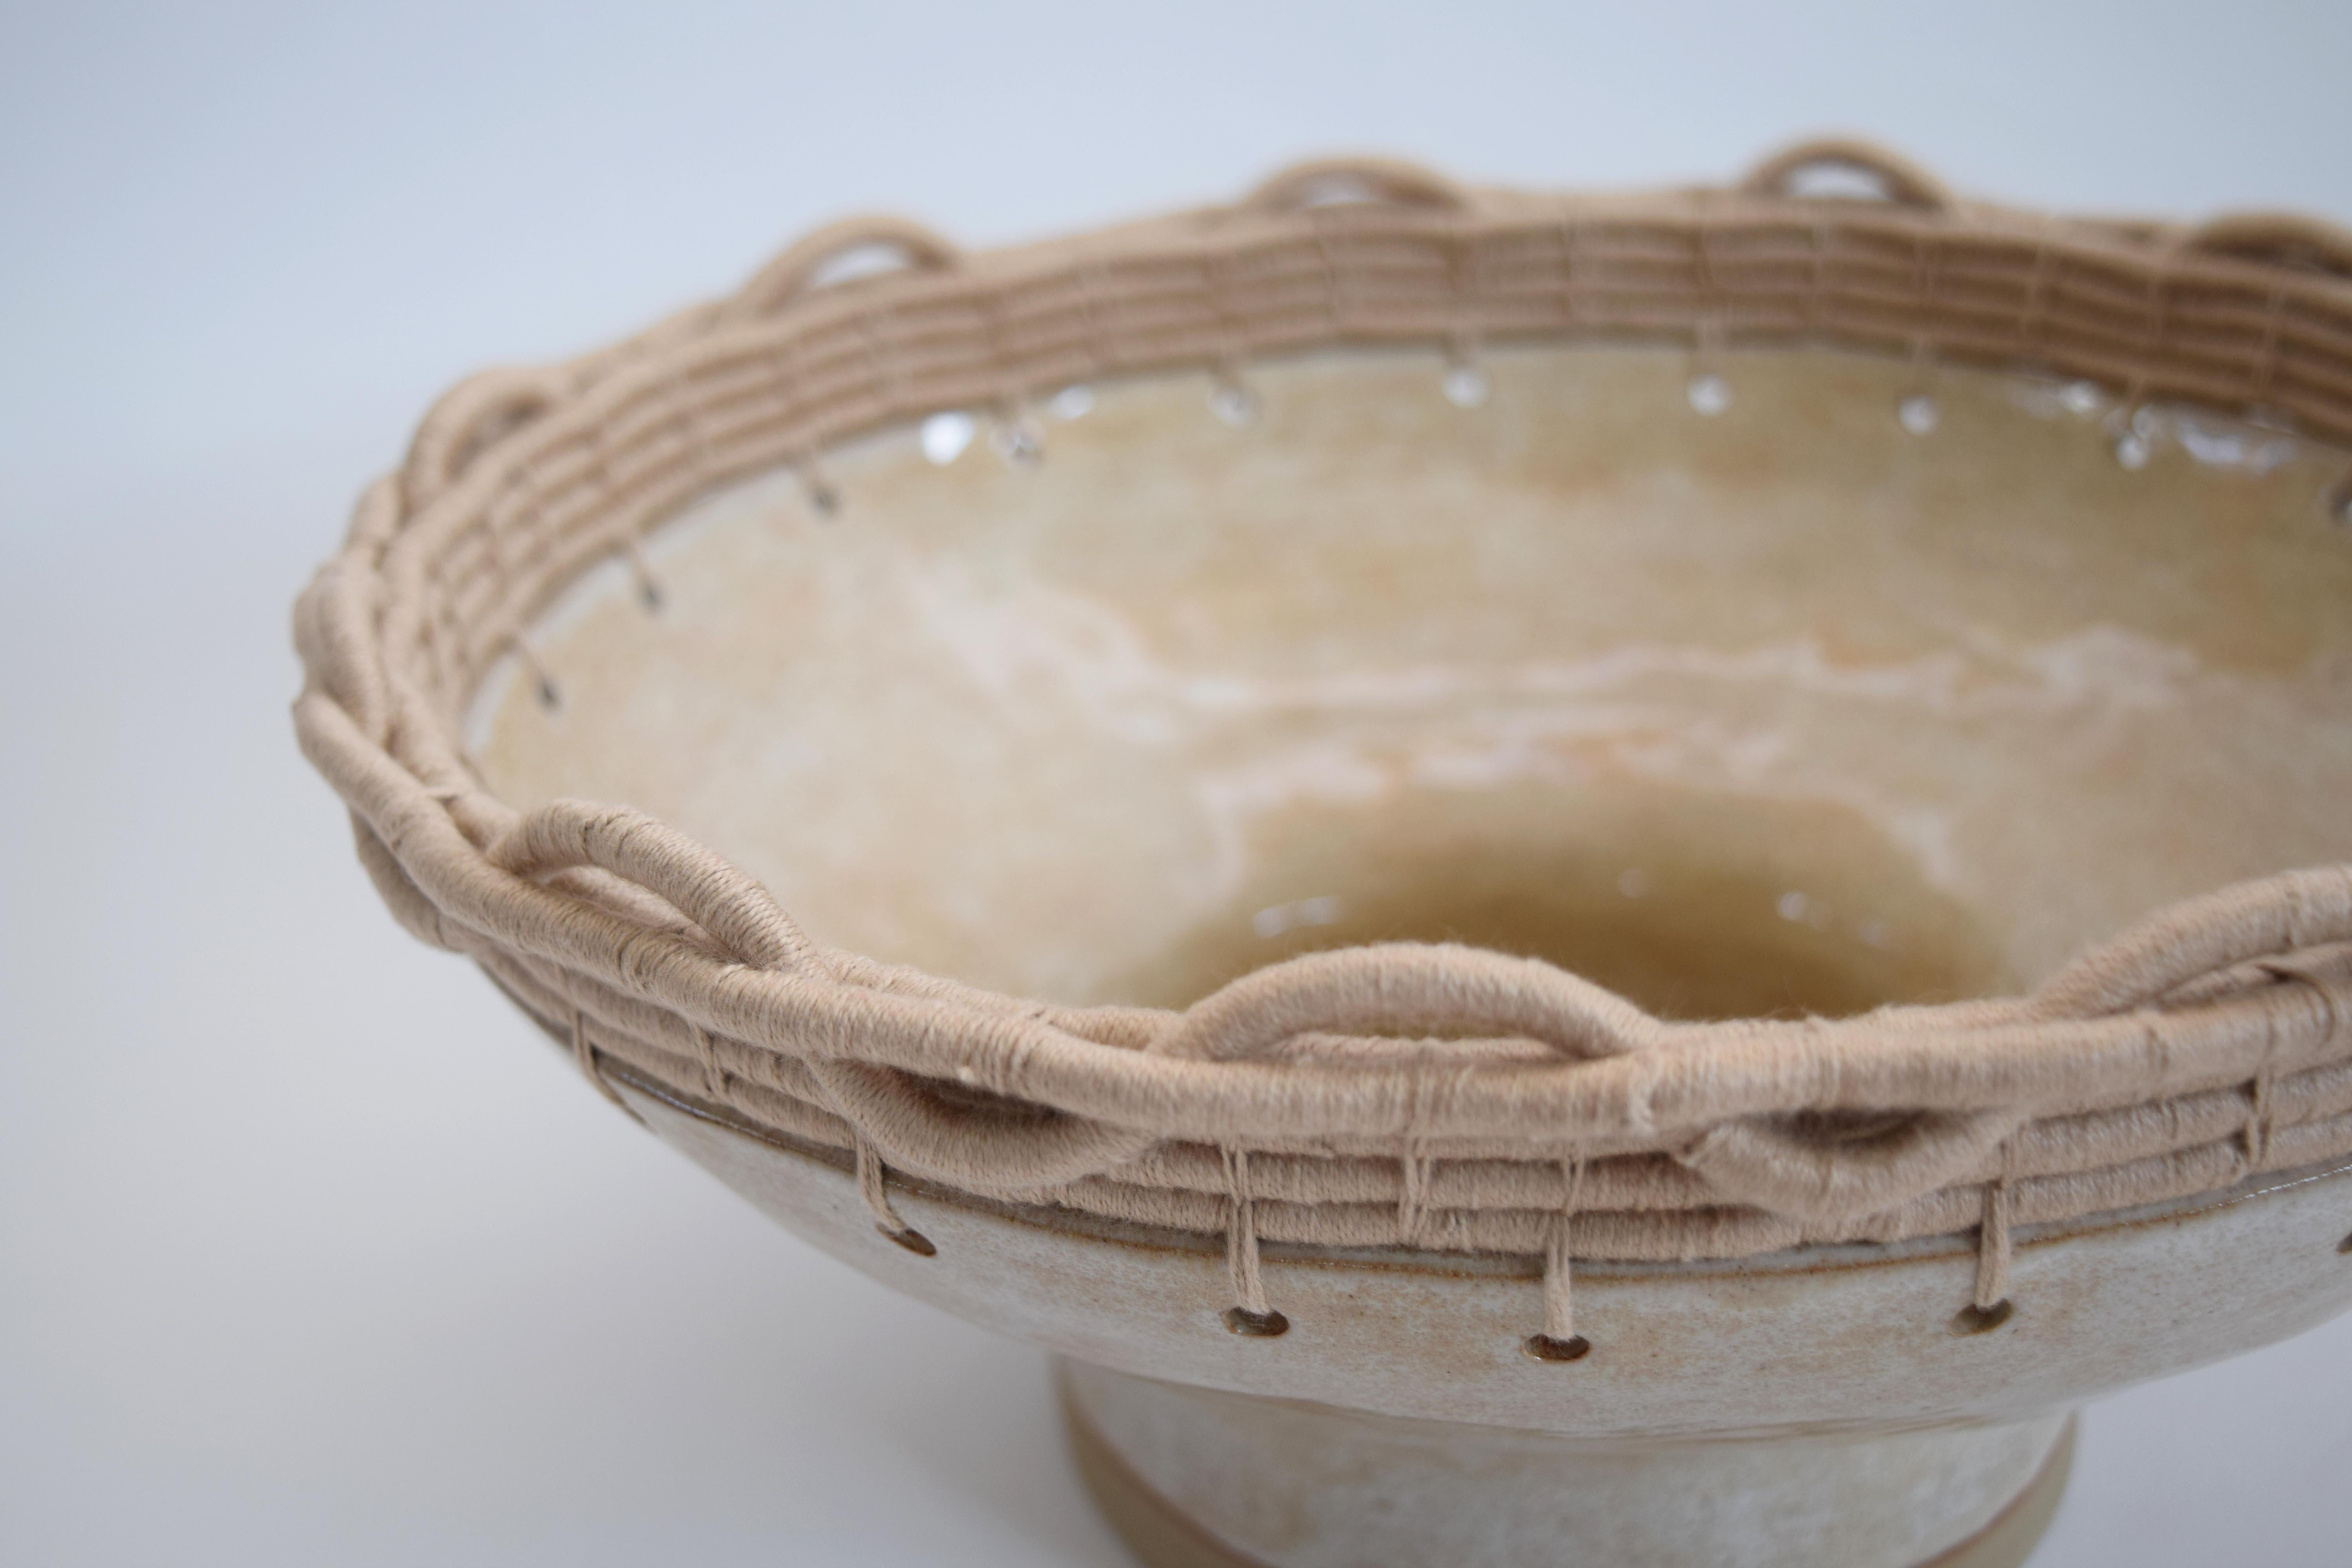 Organic Modern One of a Kind Handmade Ceramic Bowl #792, Light Tan Glaze & Woven Cotton Upper